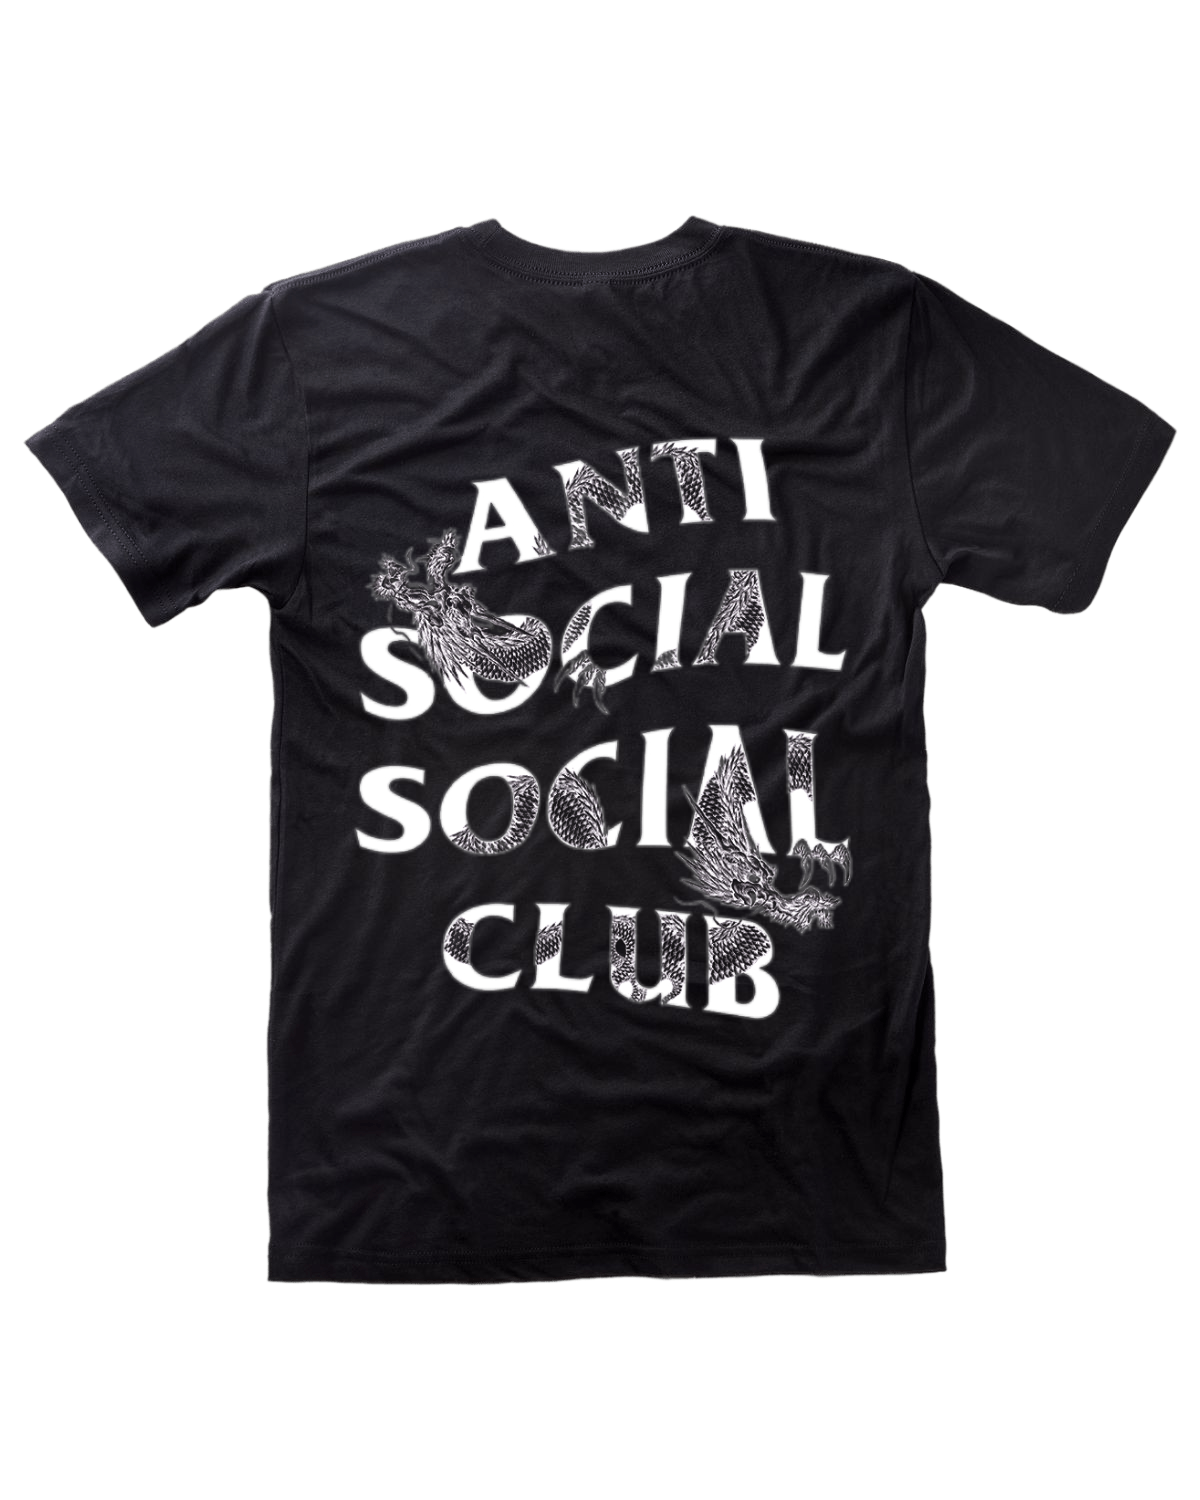 'Anti social' graphic tee